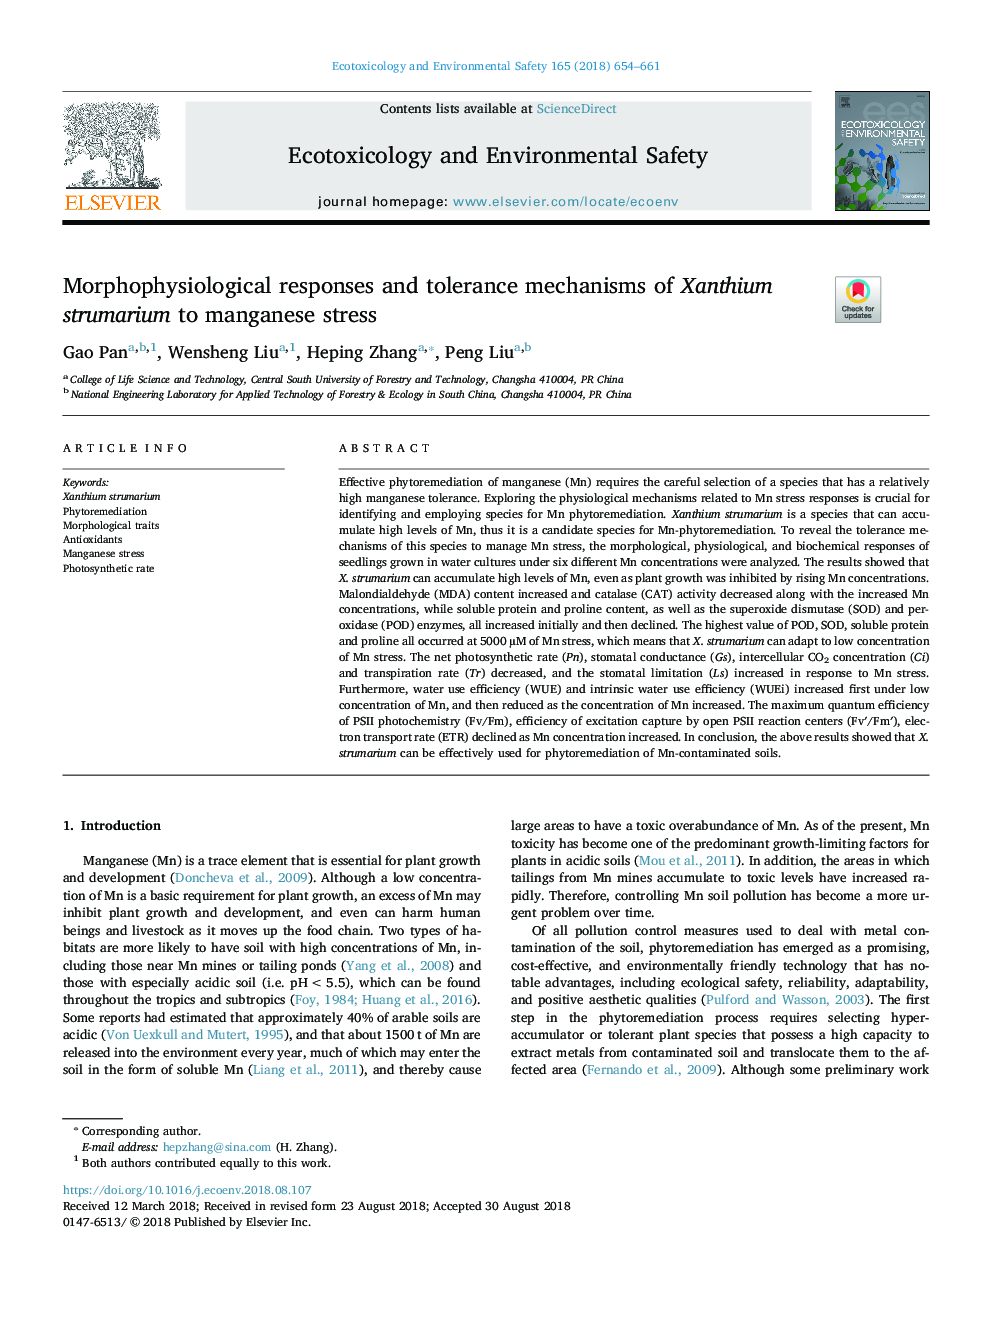 Morphophysiological responses and tolerance mechanisms of Xanthium strumarium to manganese stress